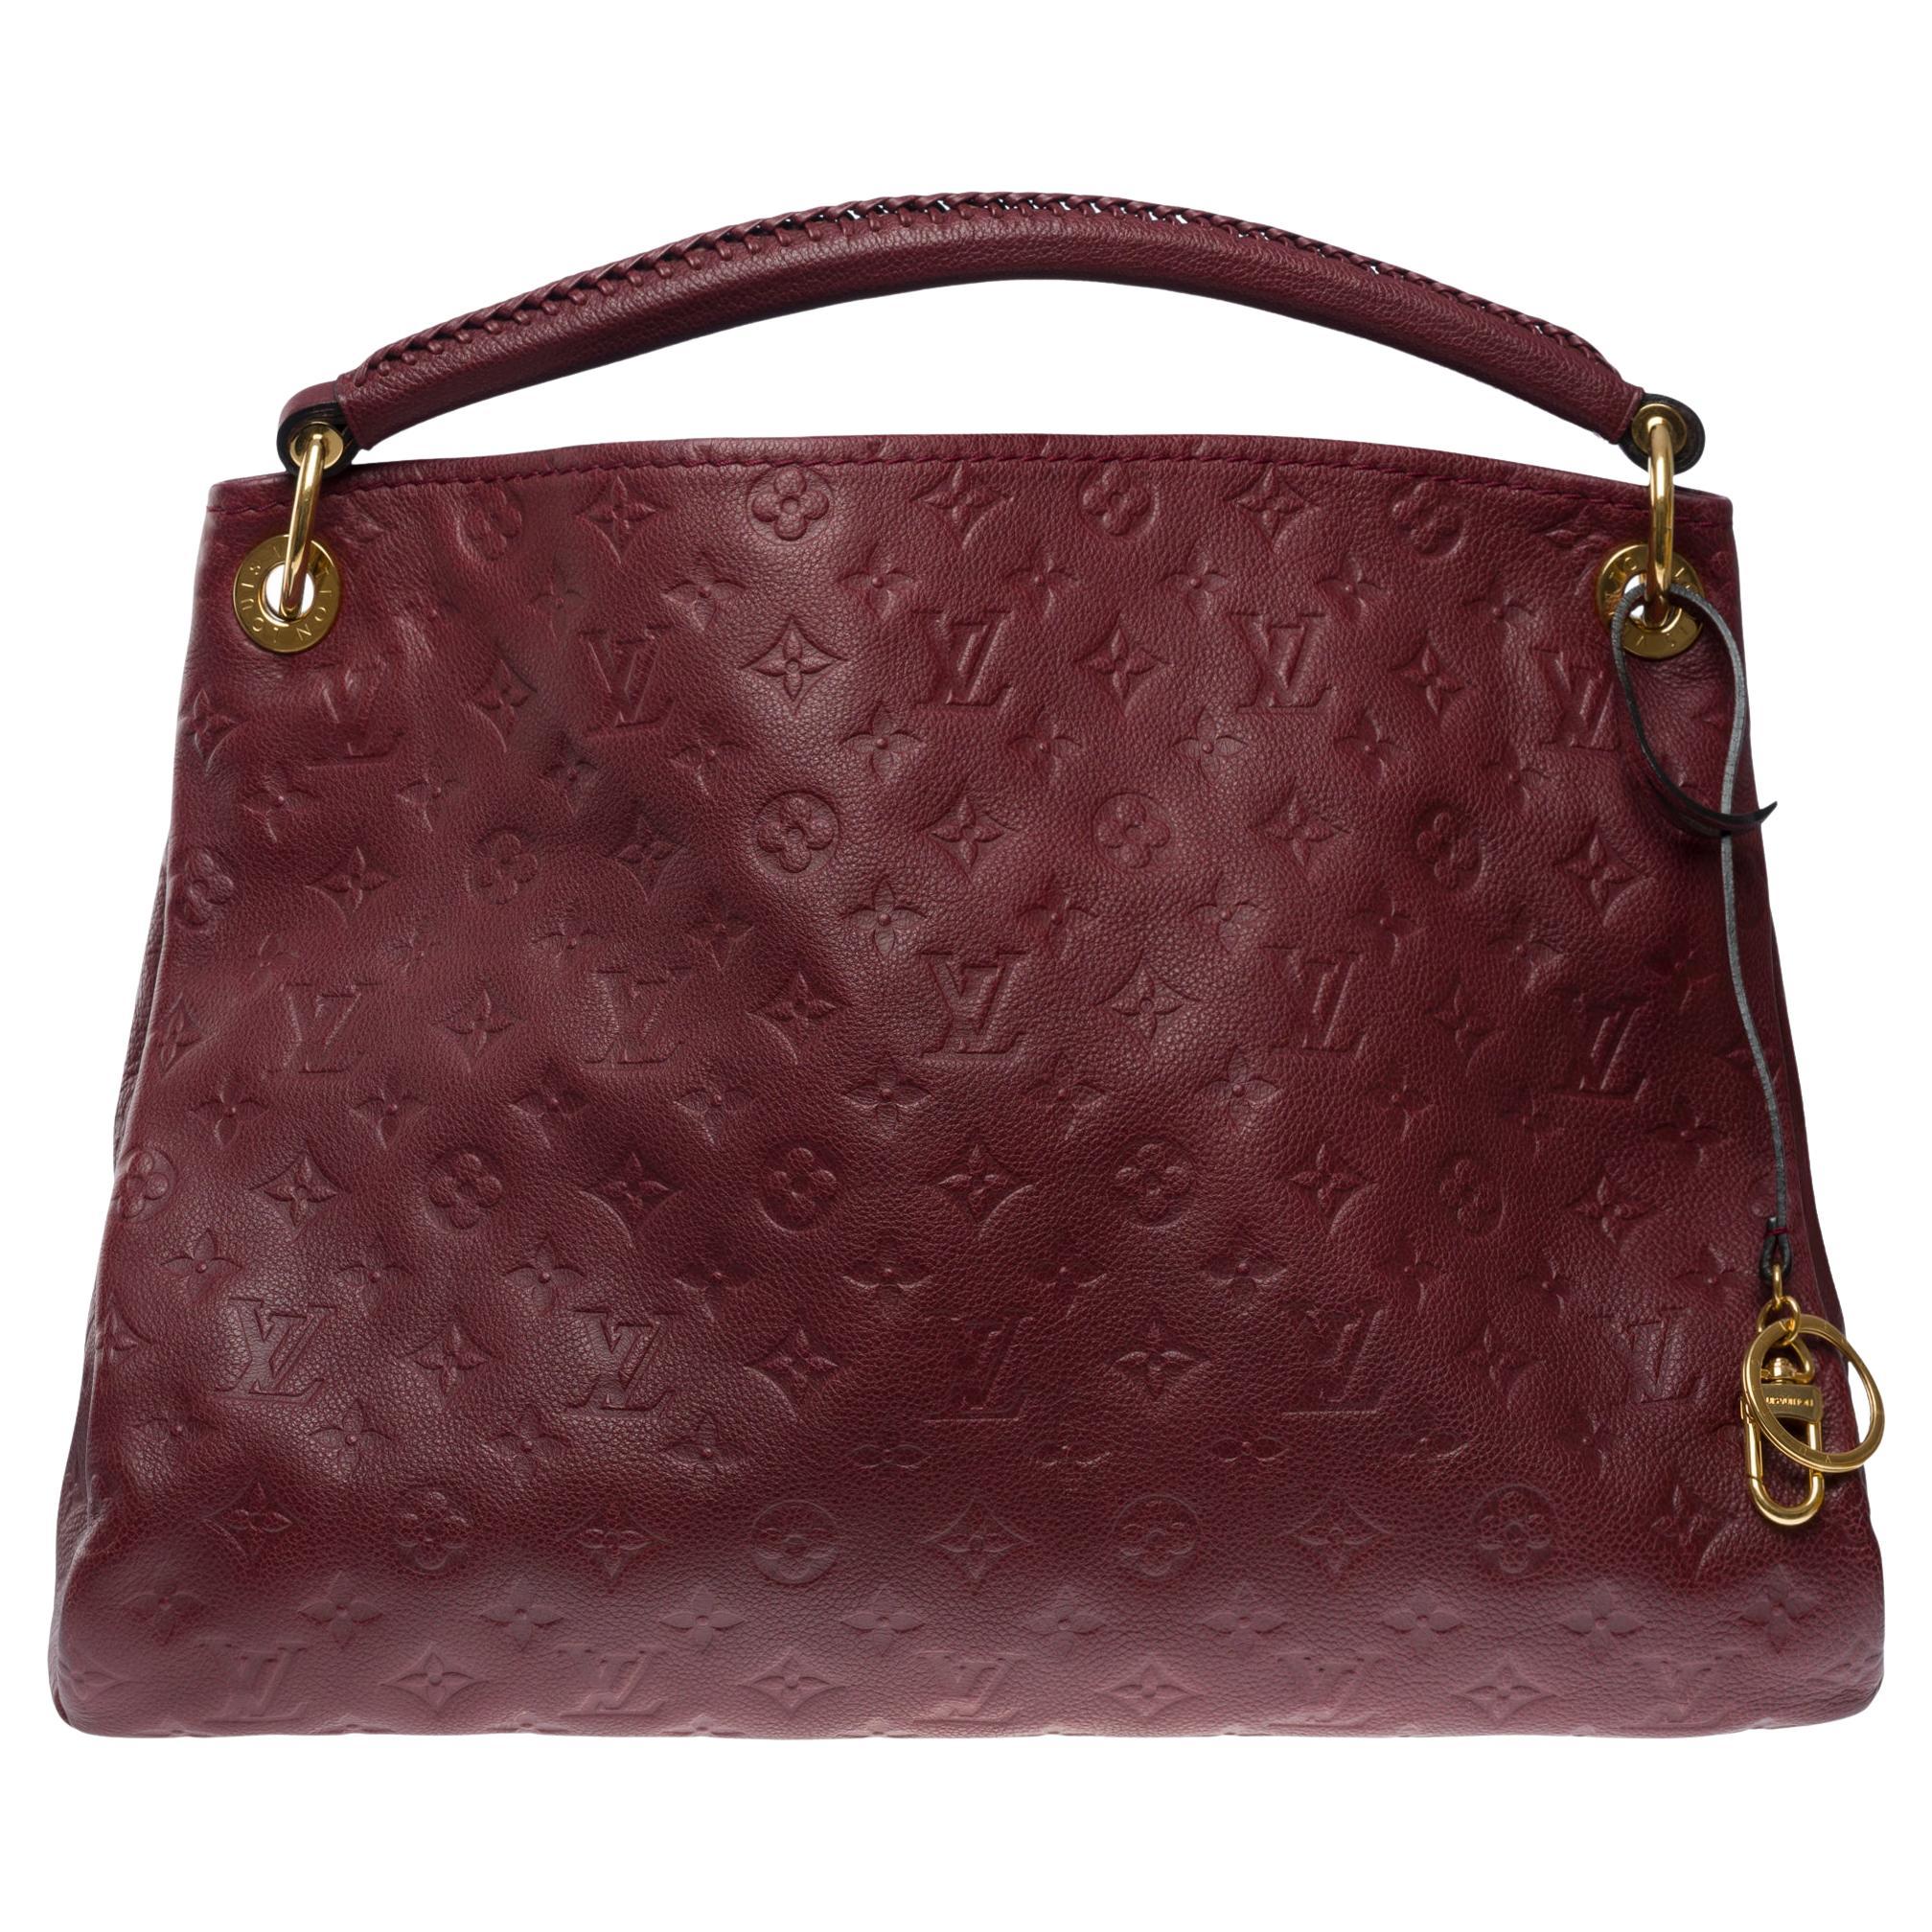 Louis Vuitton Artsy MM Hobo bag in Burgundy Monogram calfskin leather, GHW For Sale